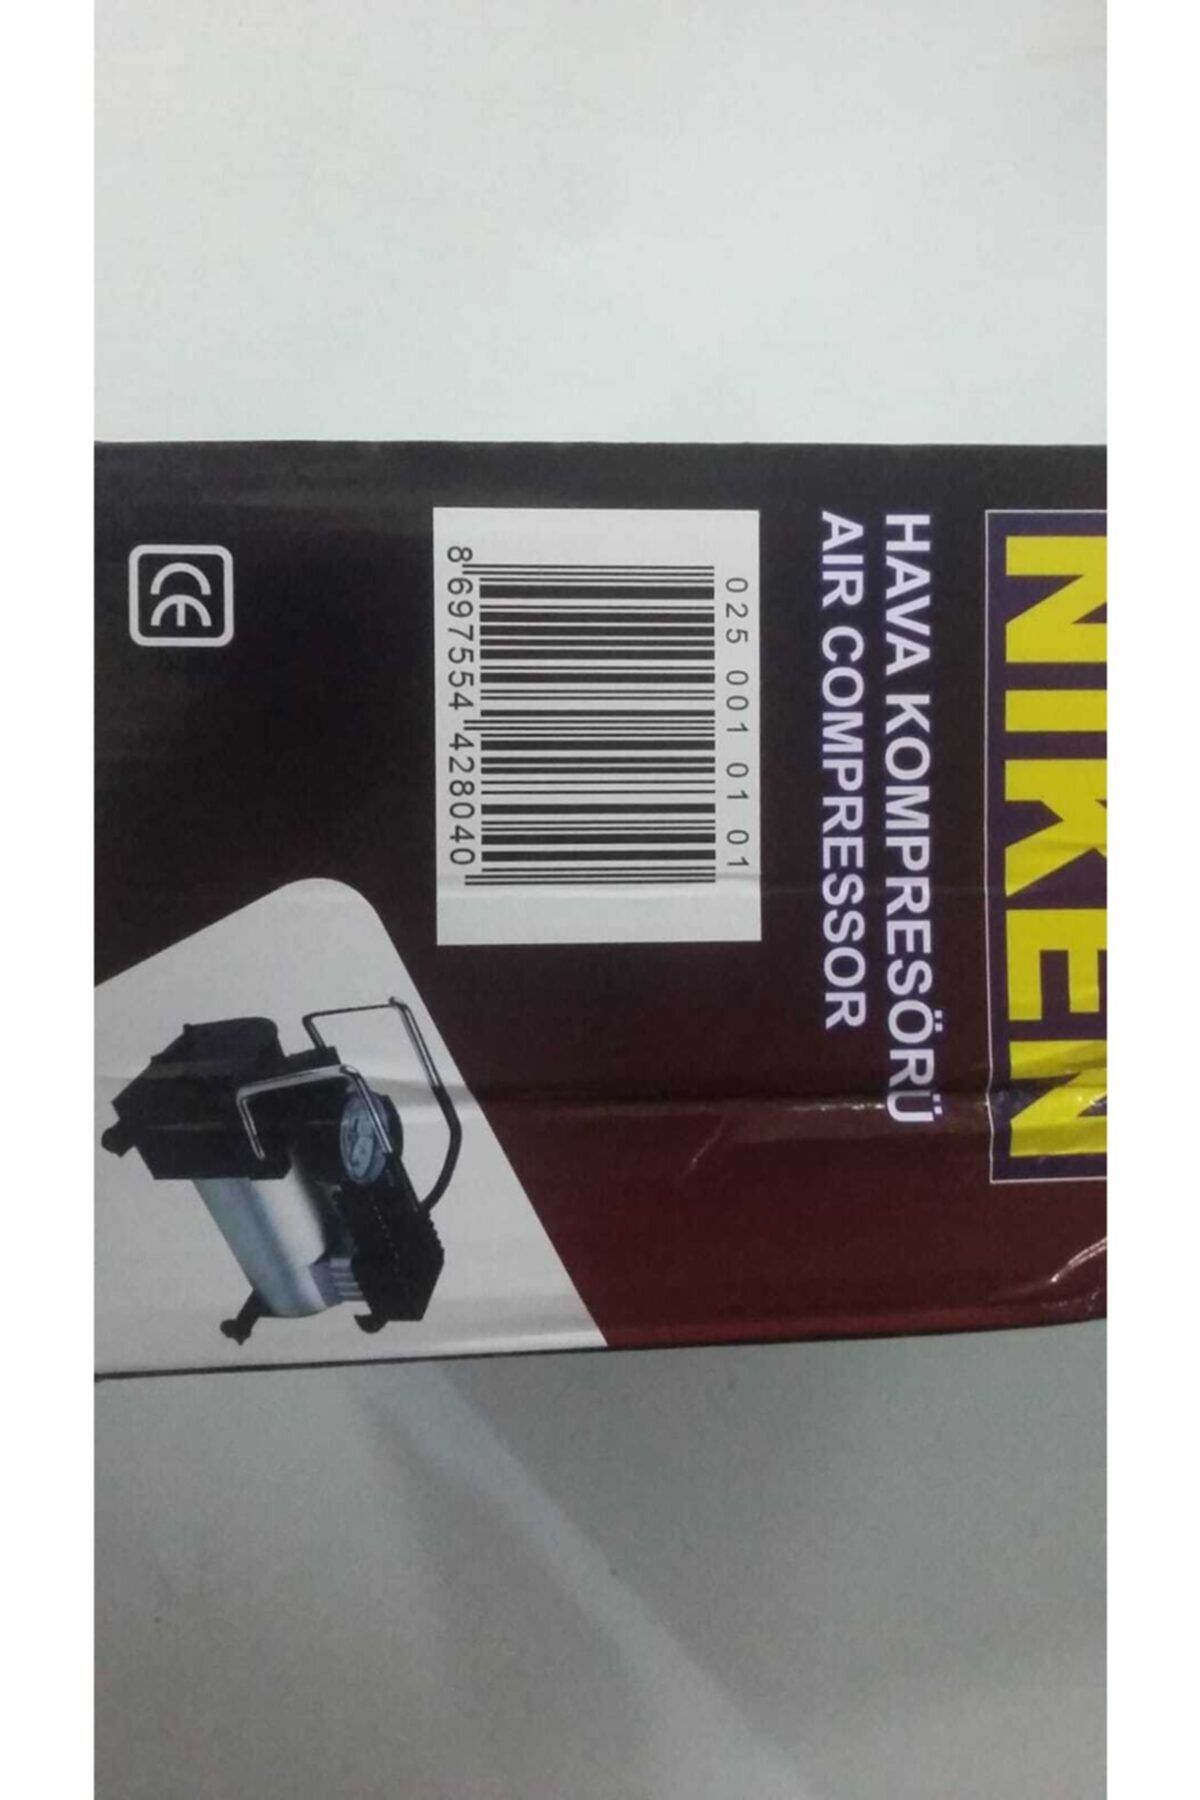 Niken Mini Komprosör Metal Gövdeli 12v 150psı